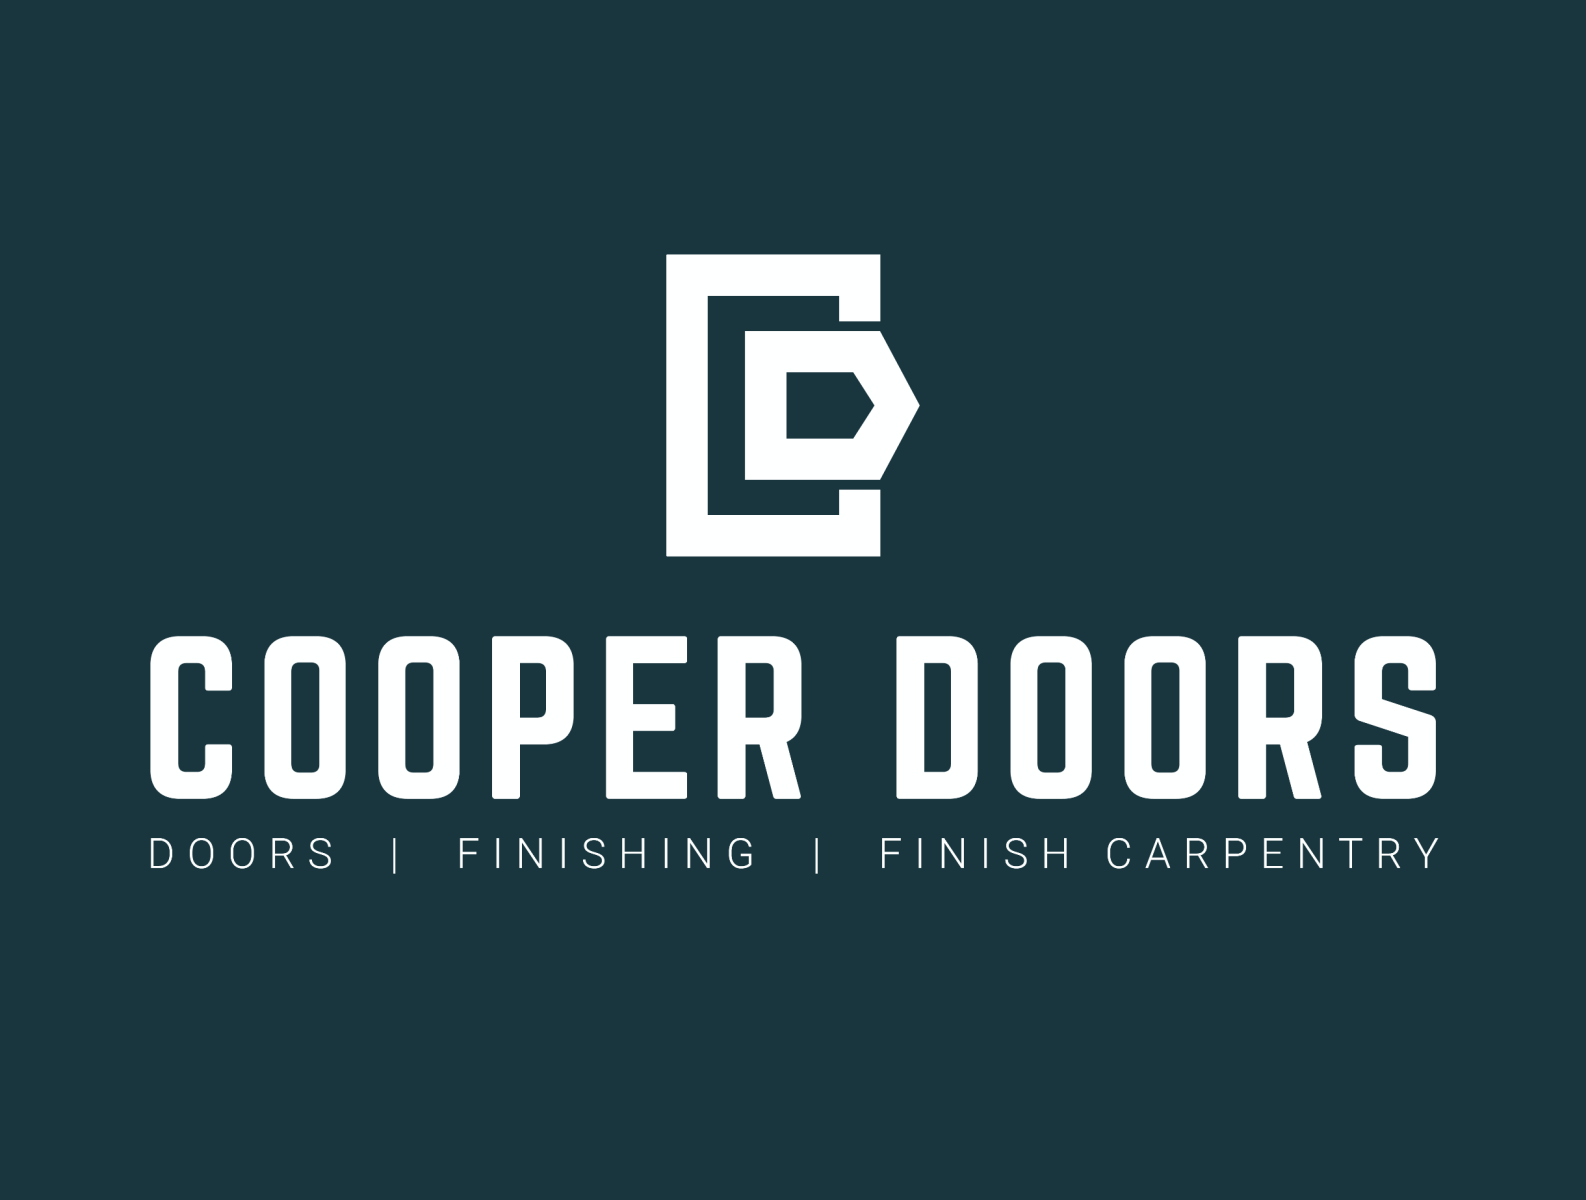 Cooper Doors | Brand Identity by Arlina Roman on Dribbble